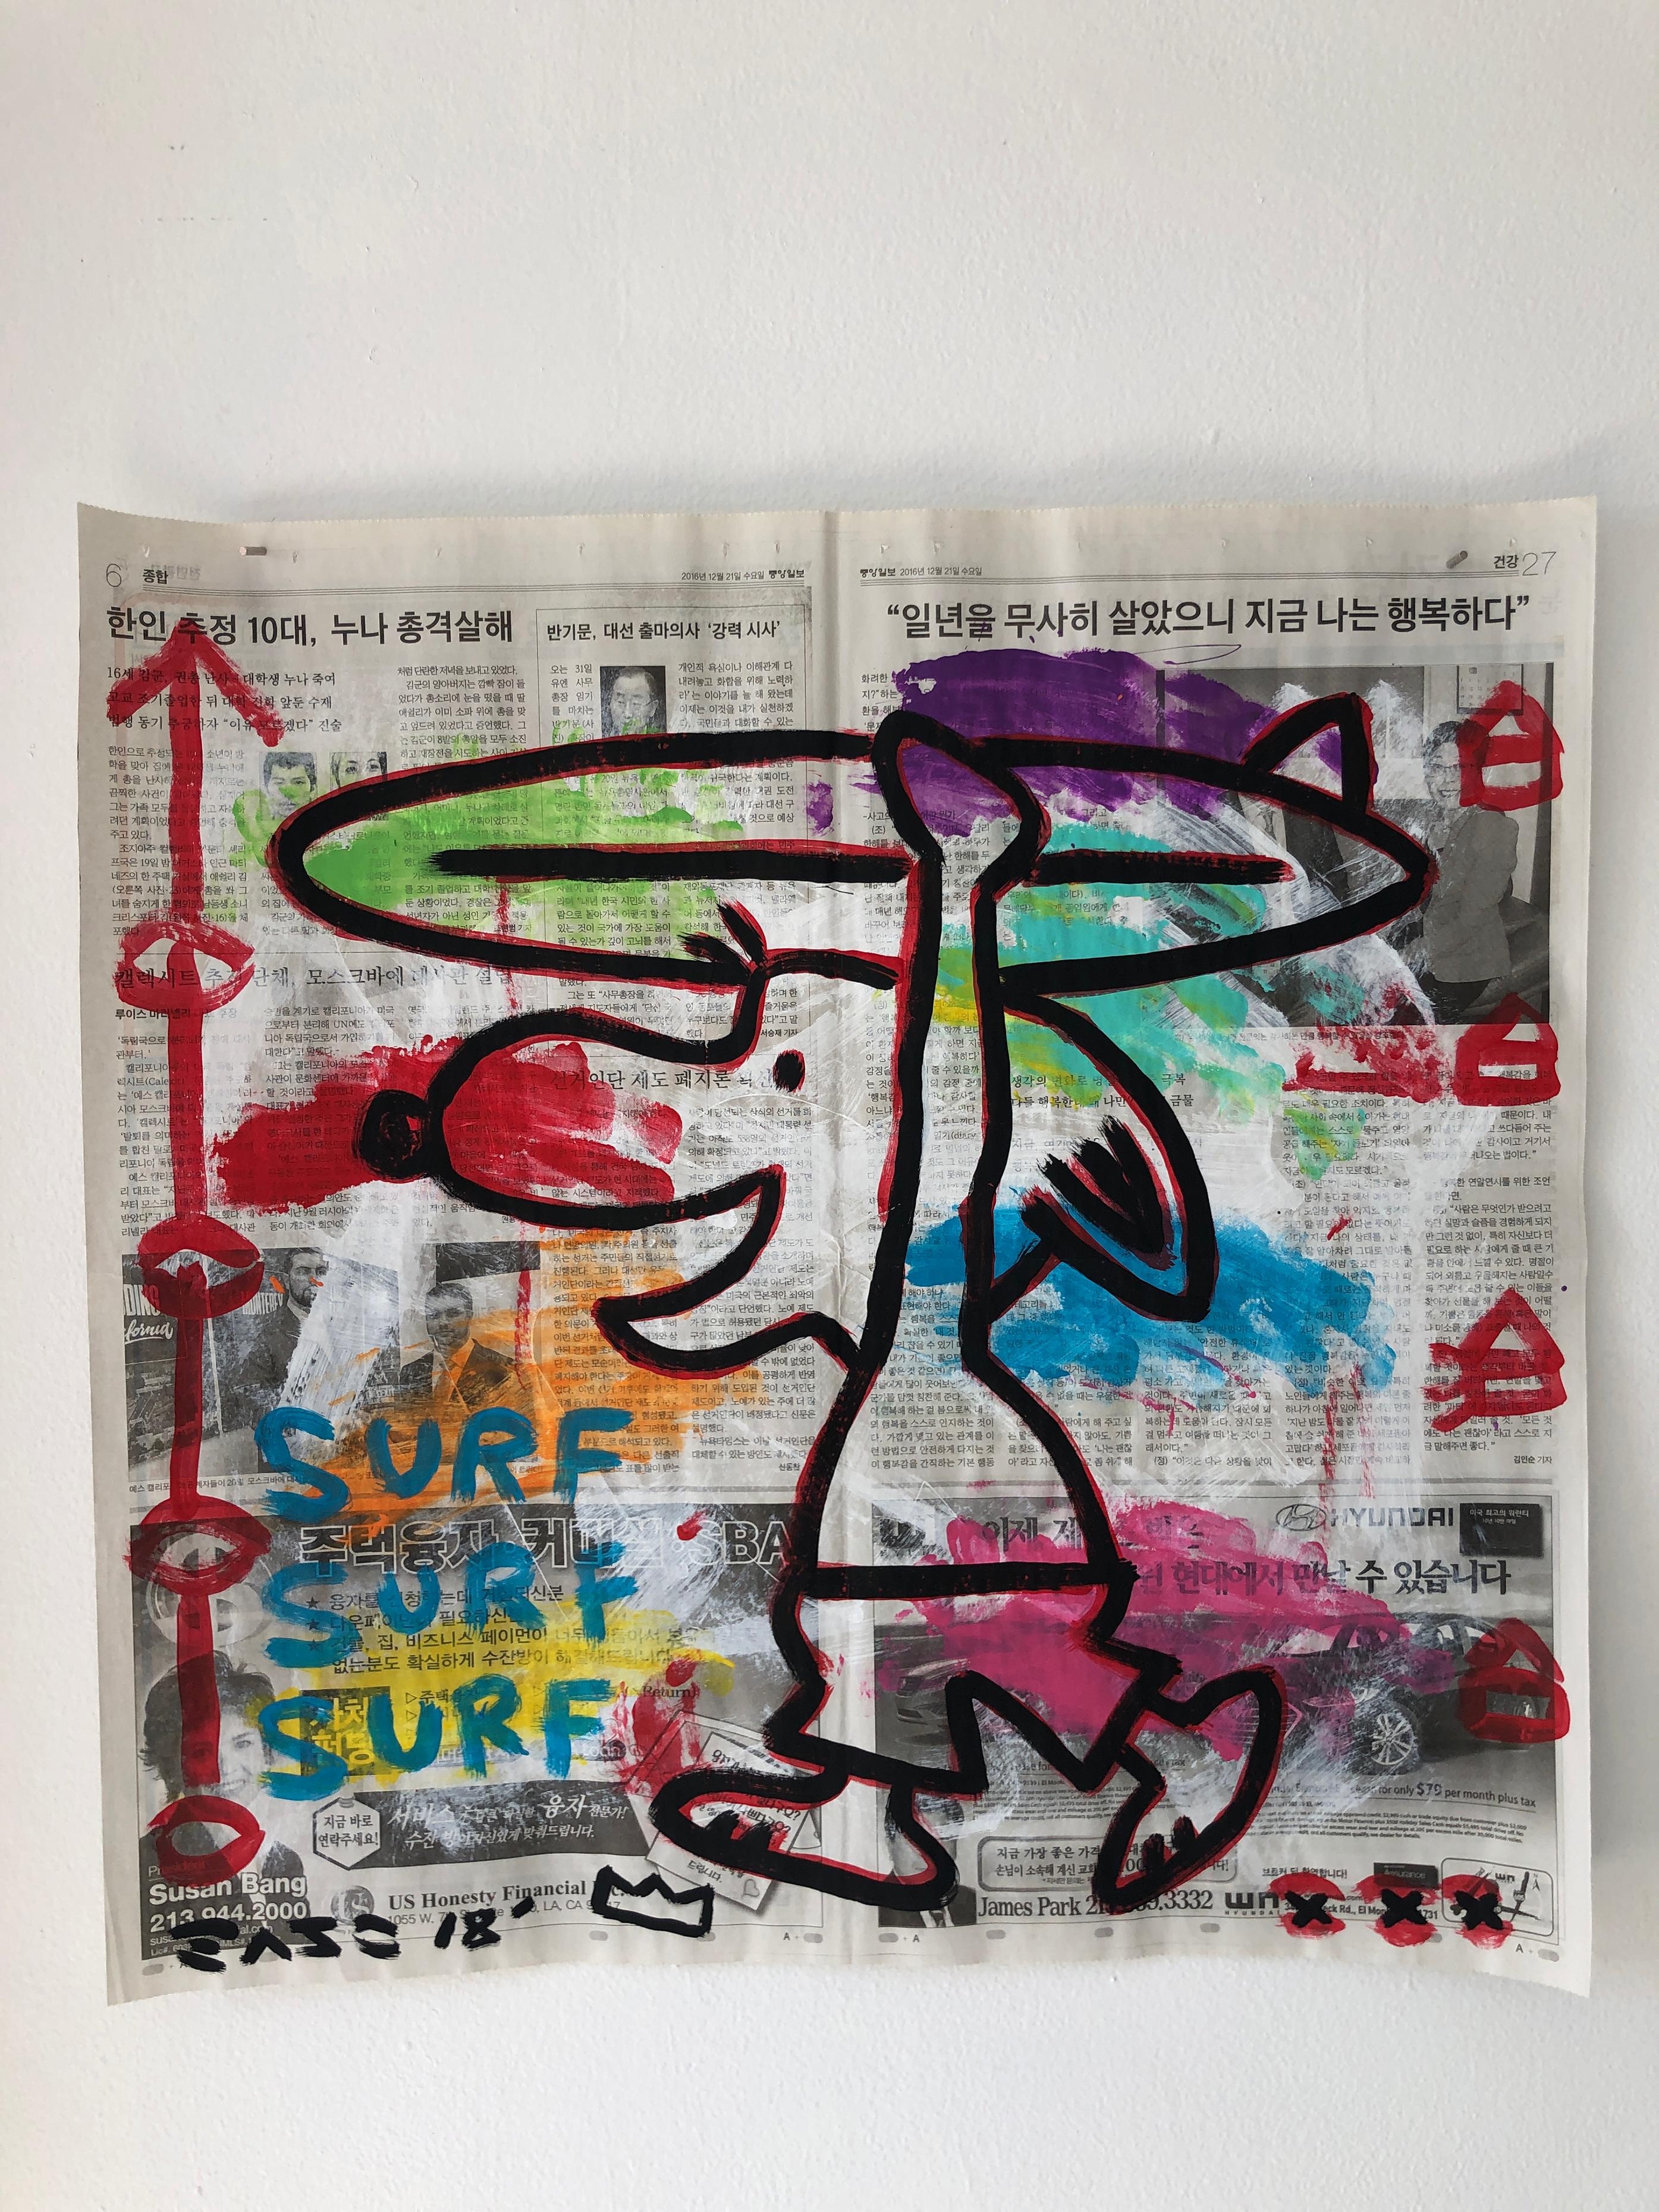 Gary John Figurative Print - "Surfing Snoopy" Acrylic and Collage on Korean newsprint